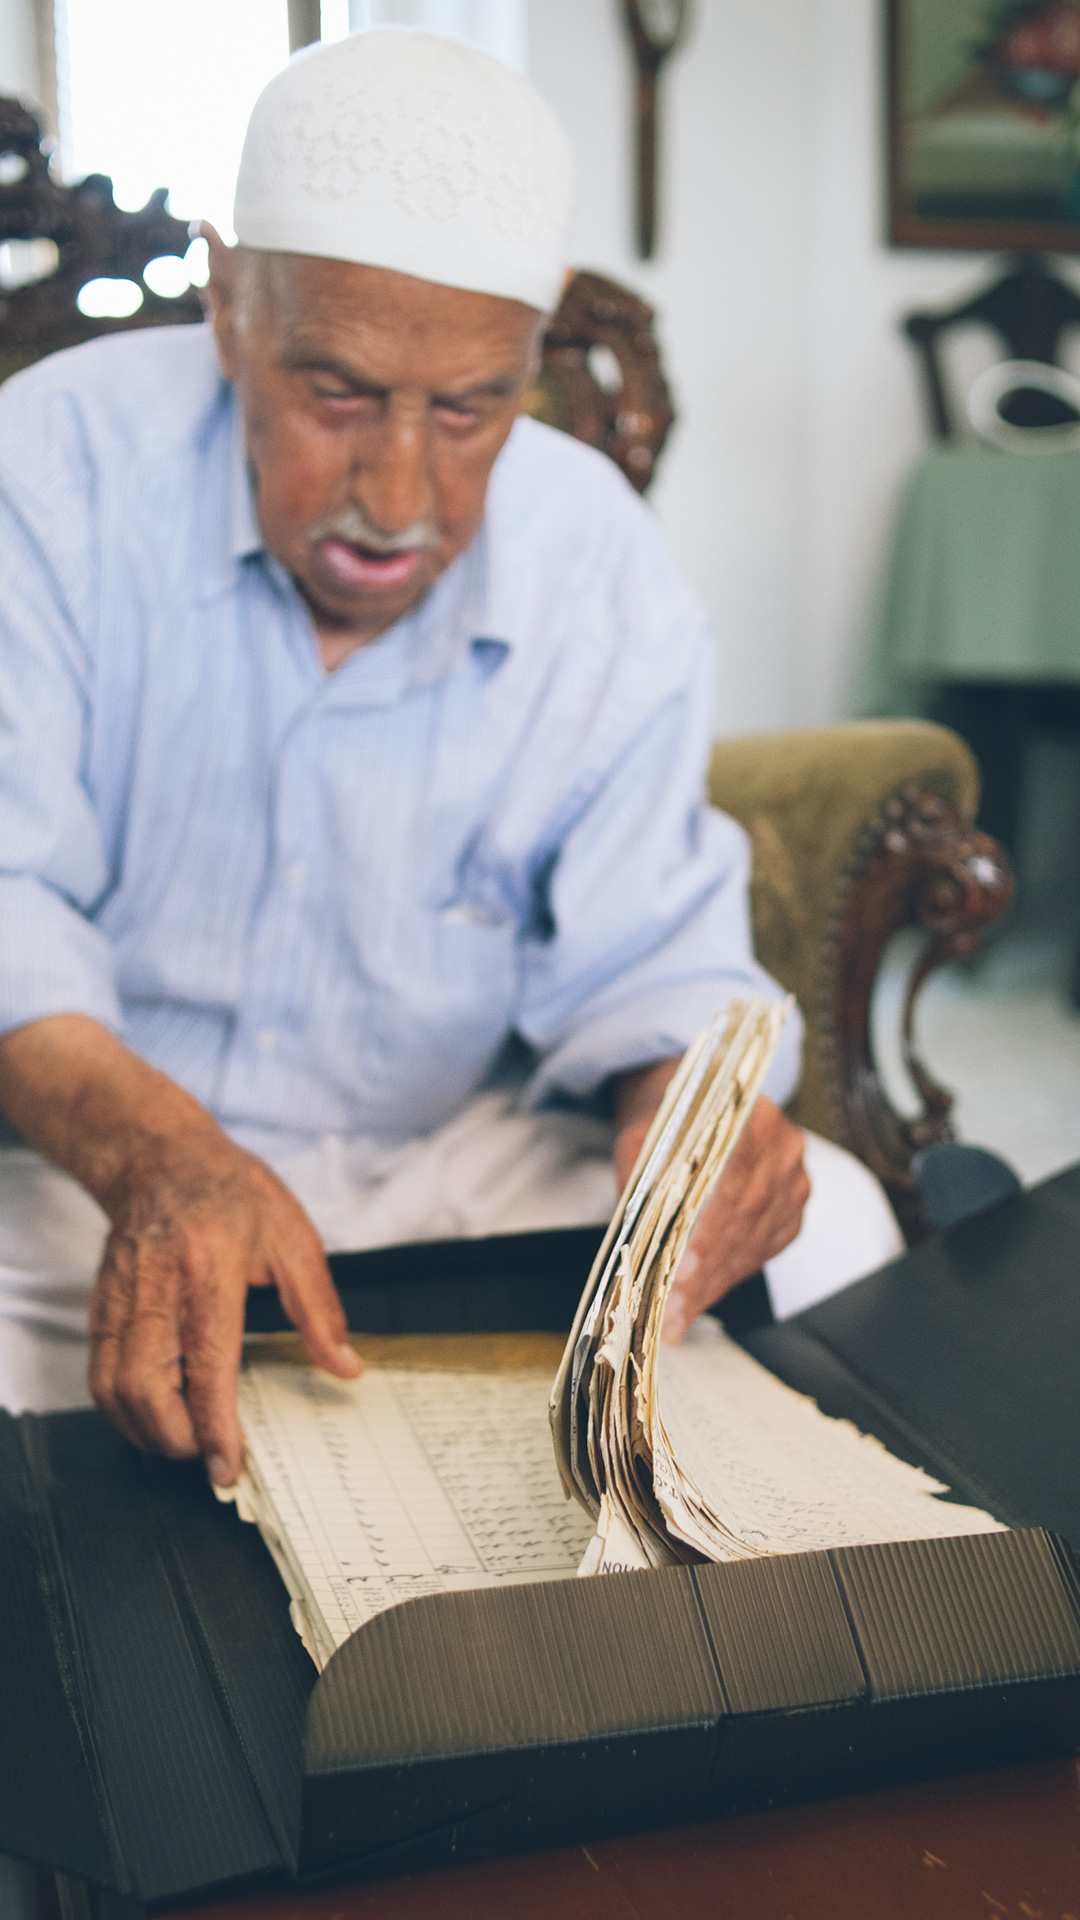 90-year-old Abu Mahmud al-Abasi, district mayor of Silwan